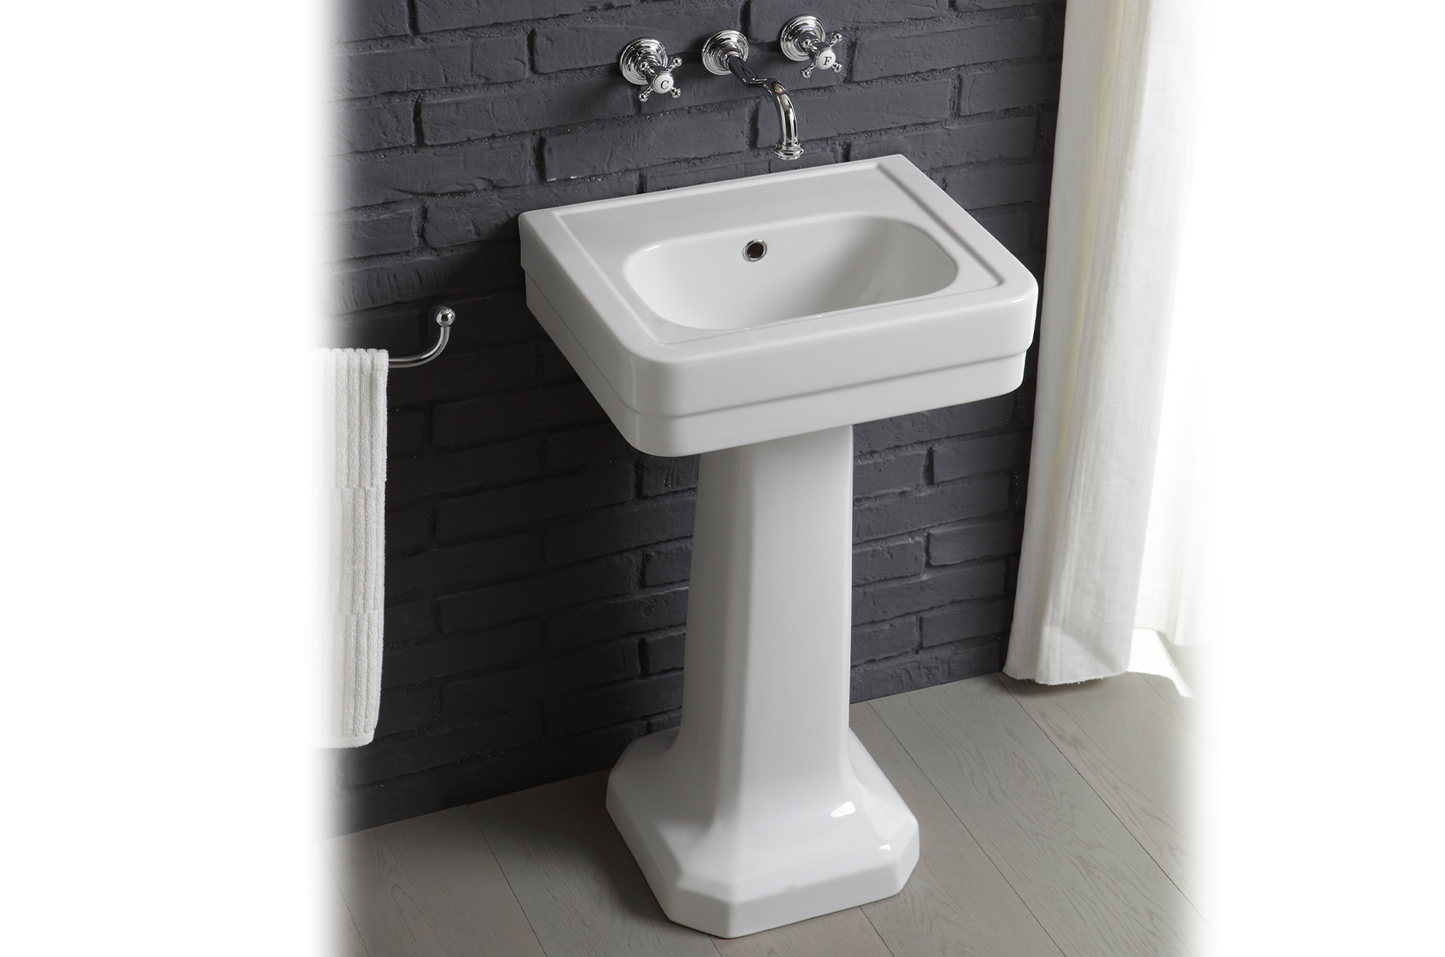 Ceramic washbasin with Classic style pedestal